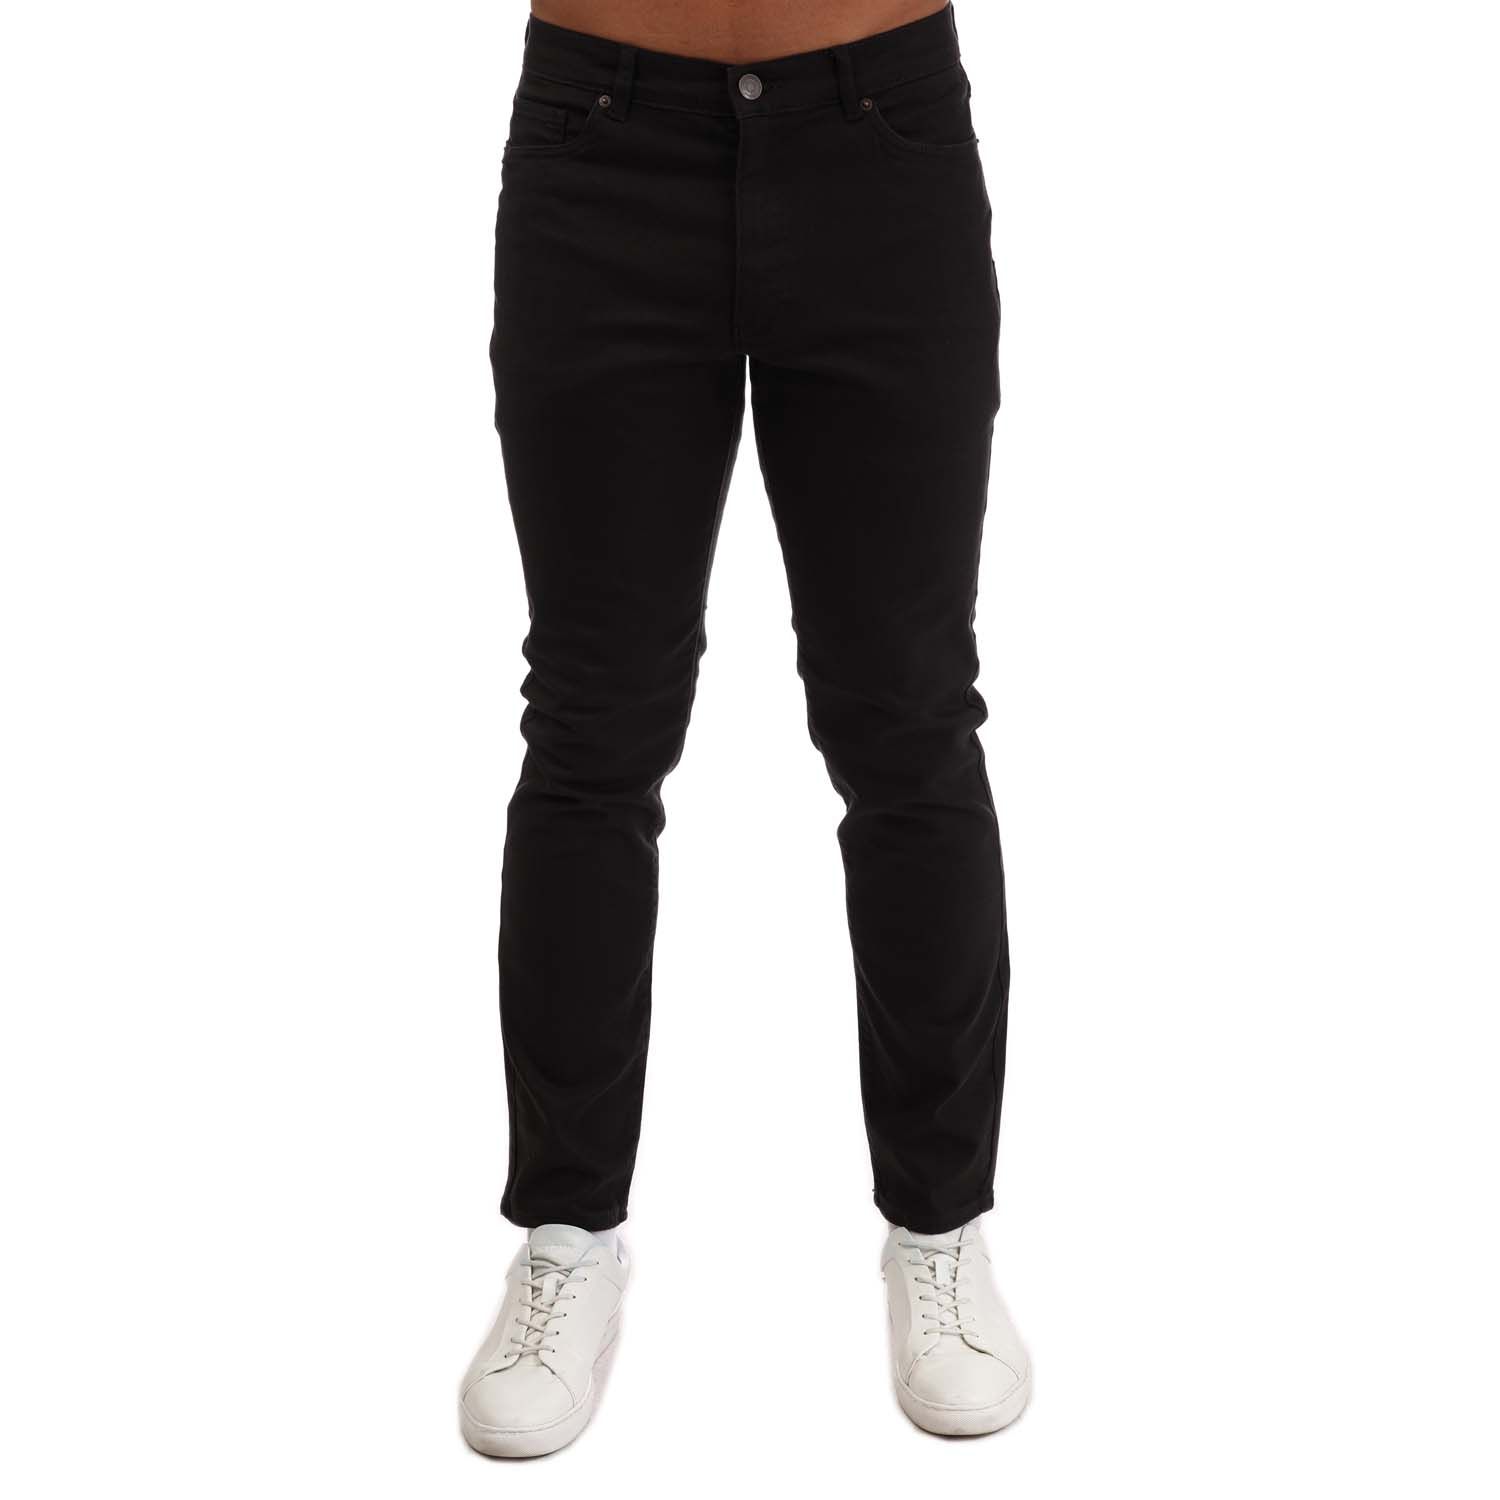 Black Farah Mens Lawson Regular Fit Stretch Jeans - Get The Label